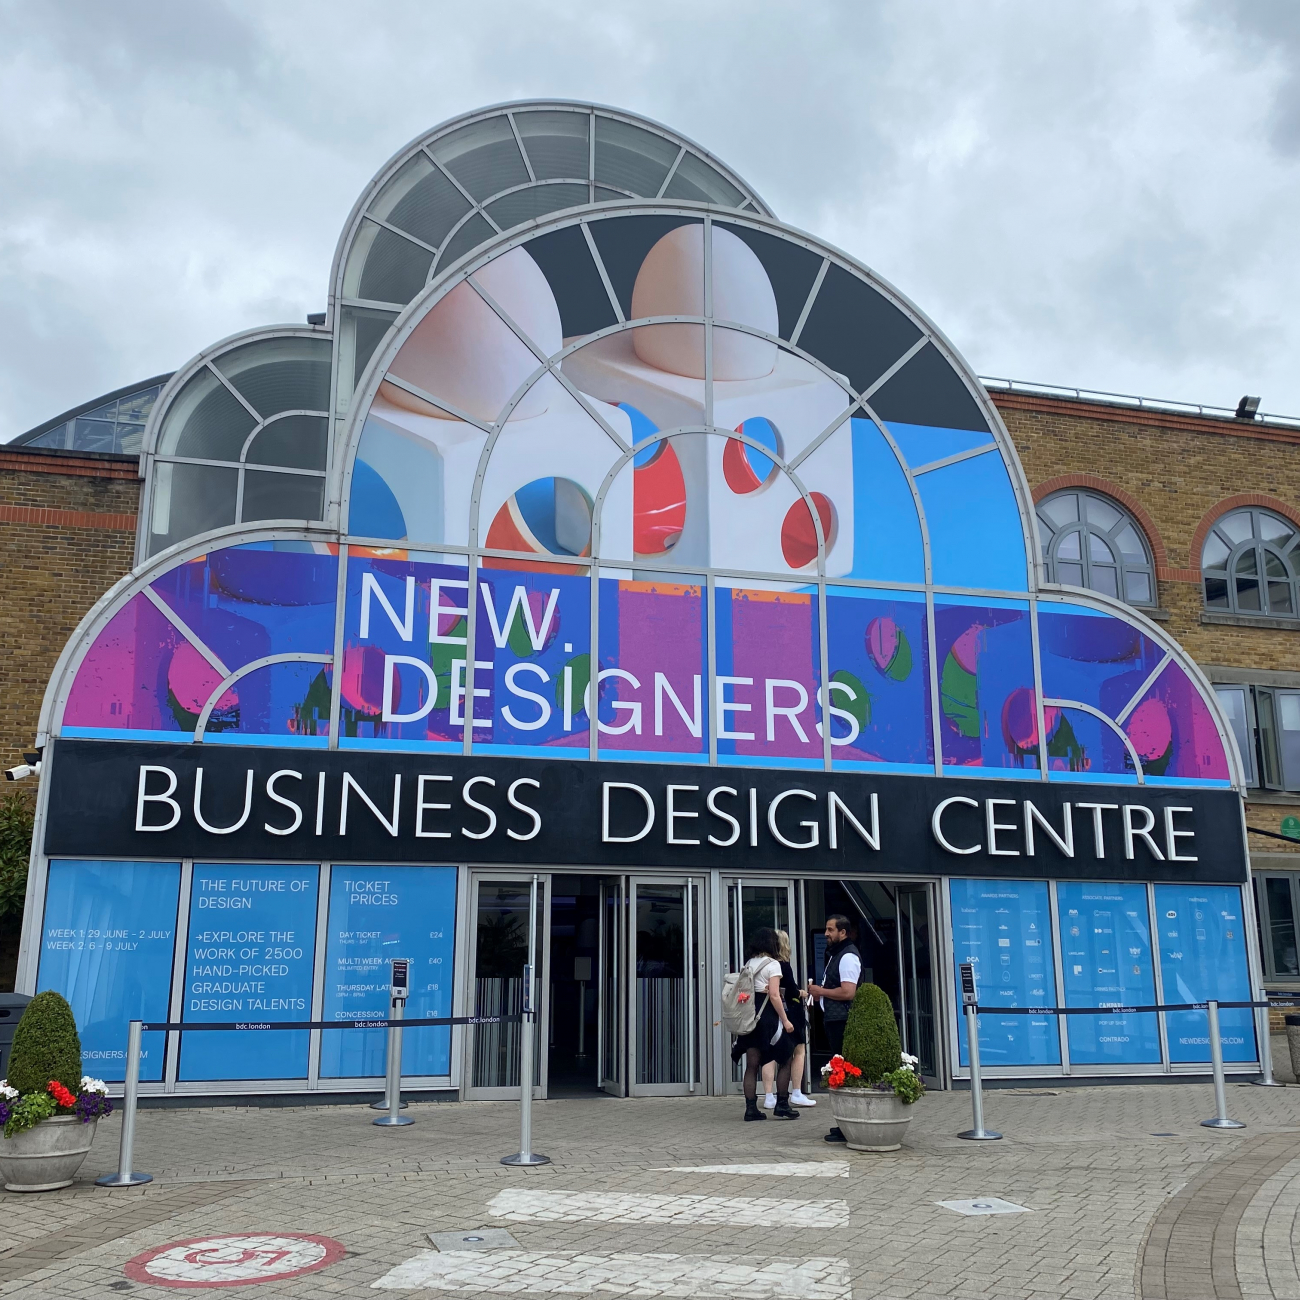 New Designer's Business Design Centre building